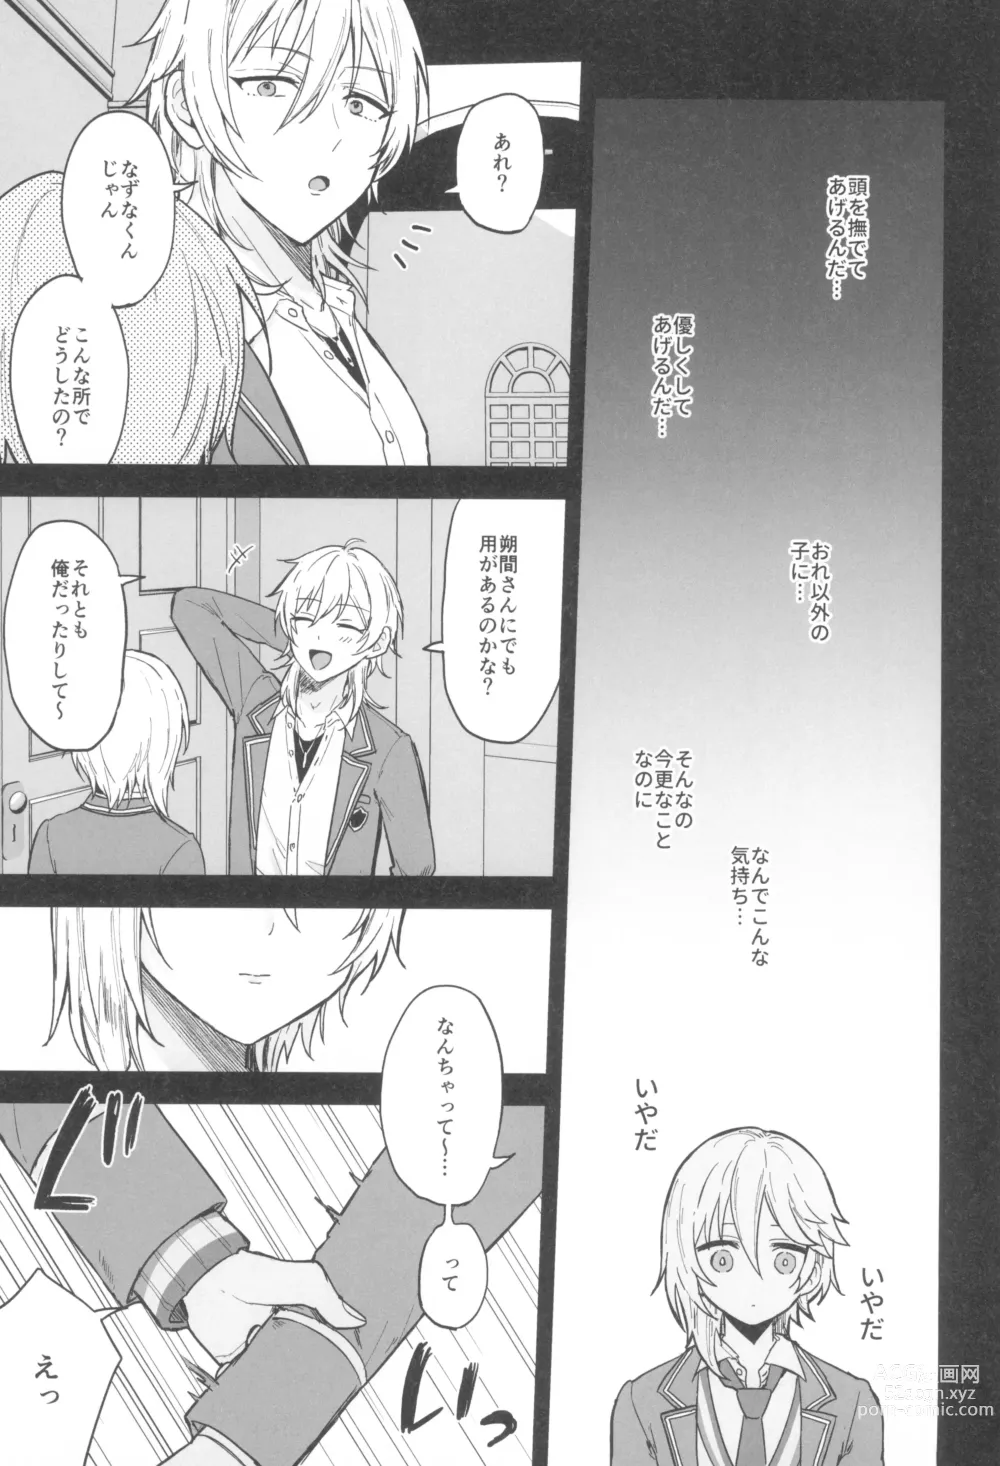 Page 27 of doujinshi Kore made mo korekara mo